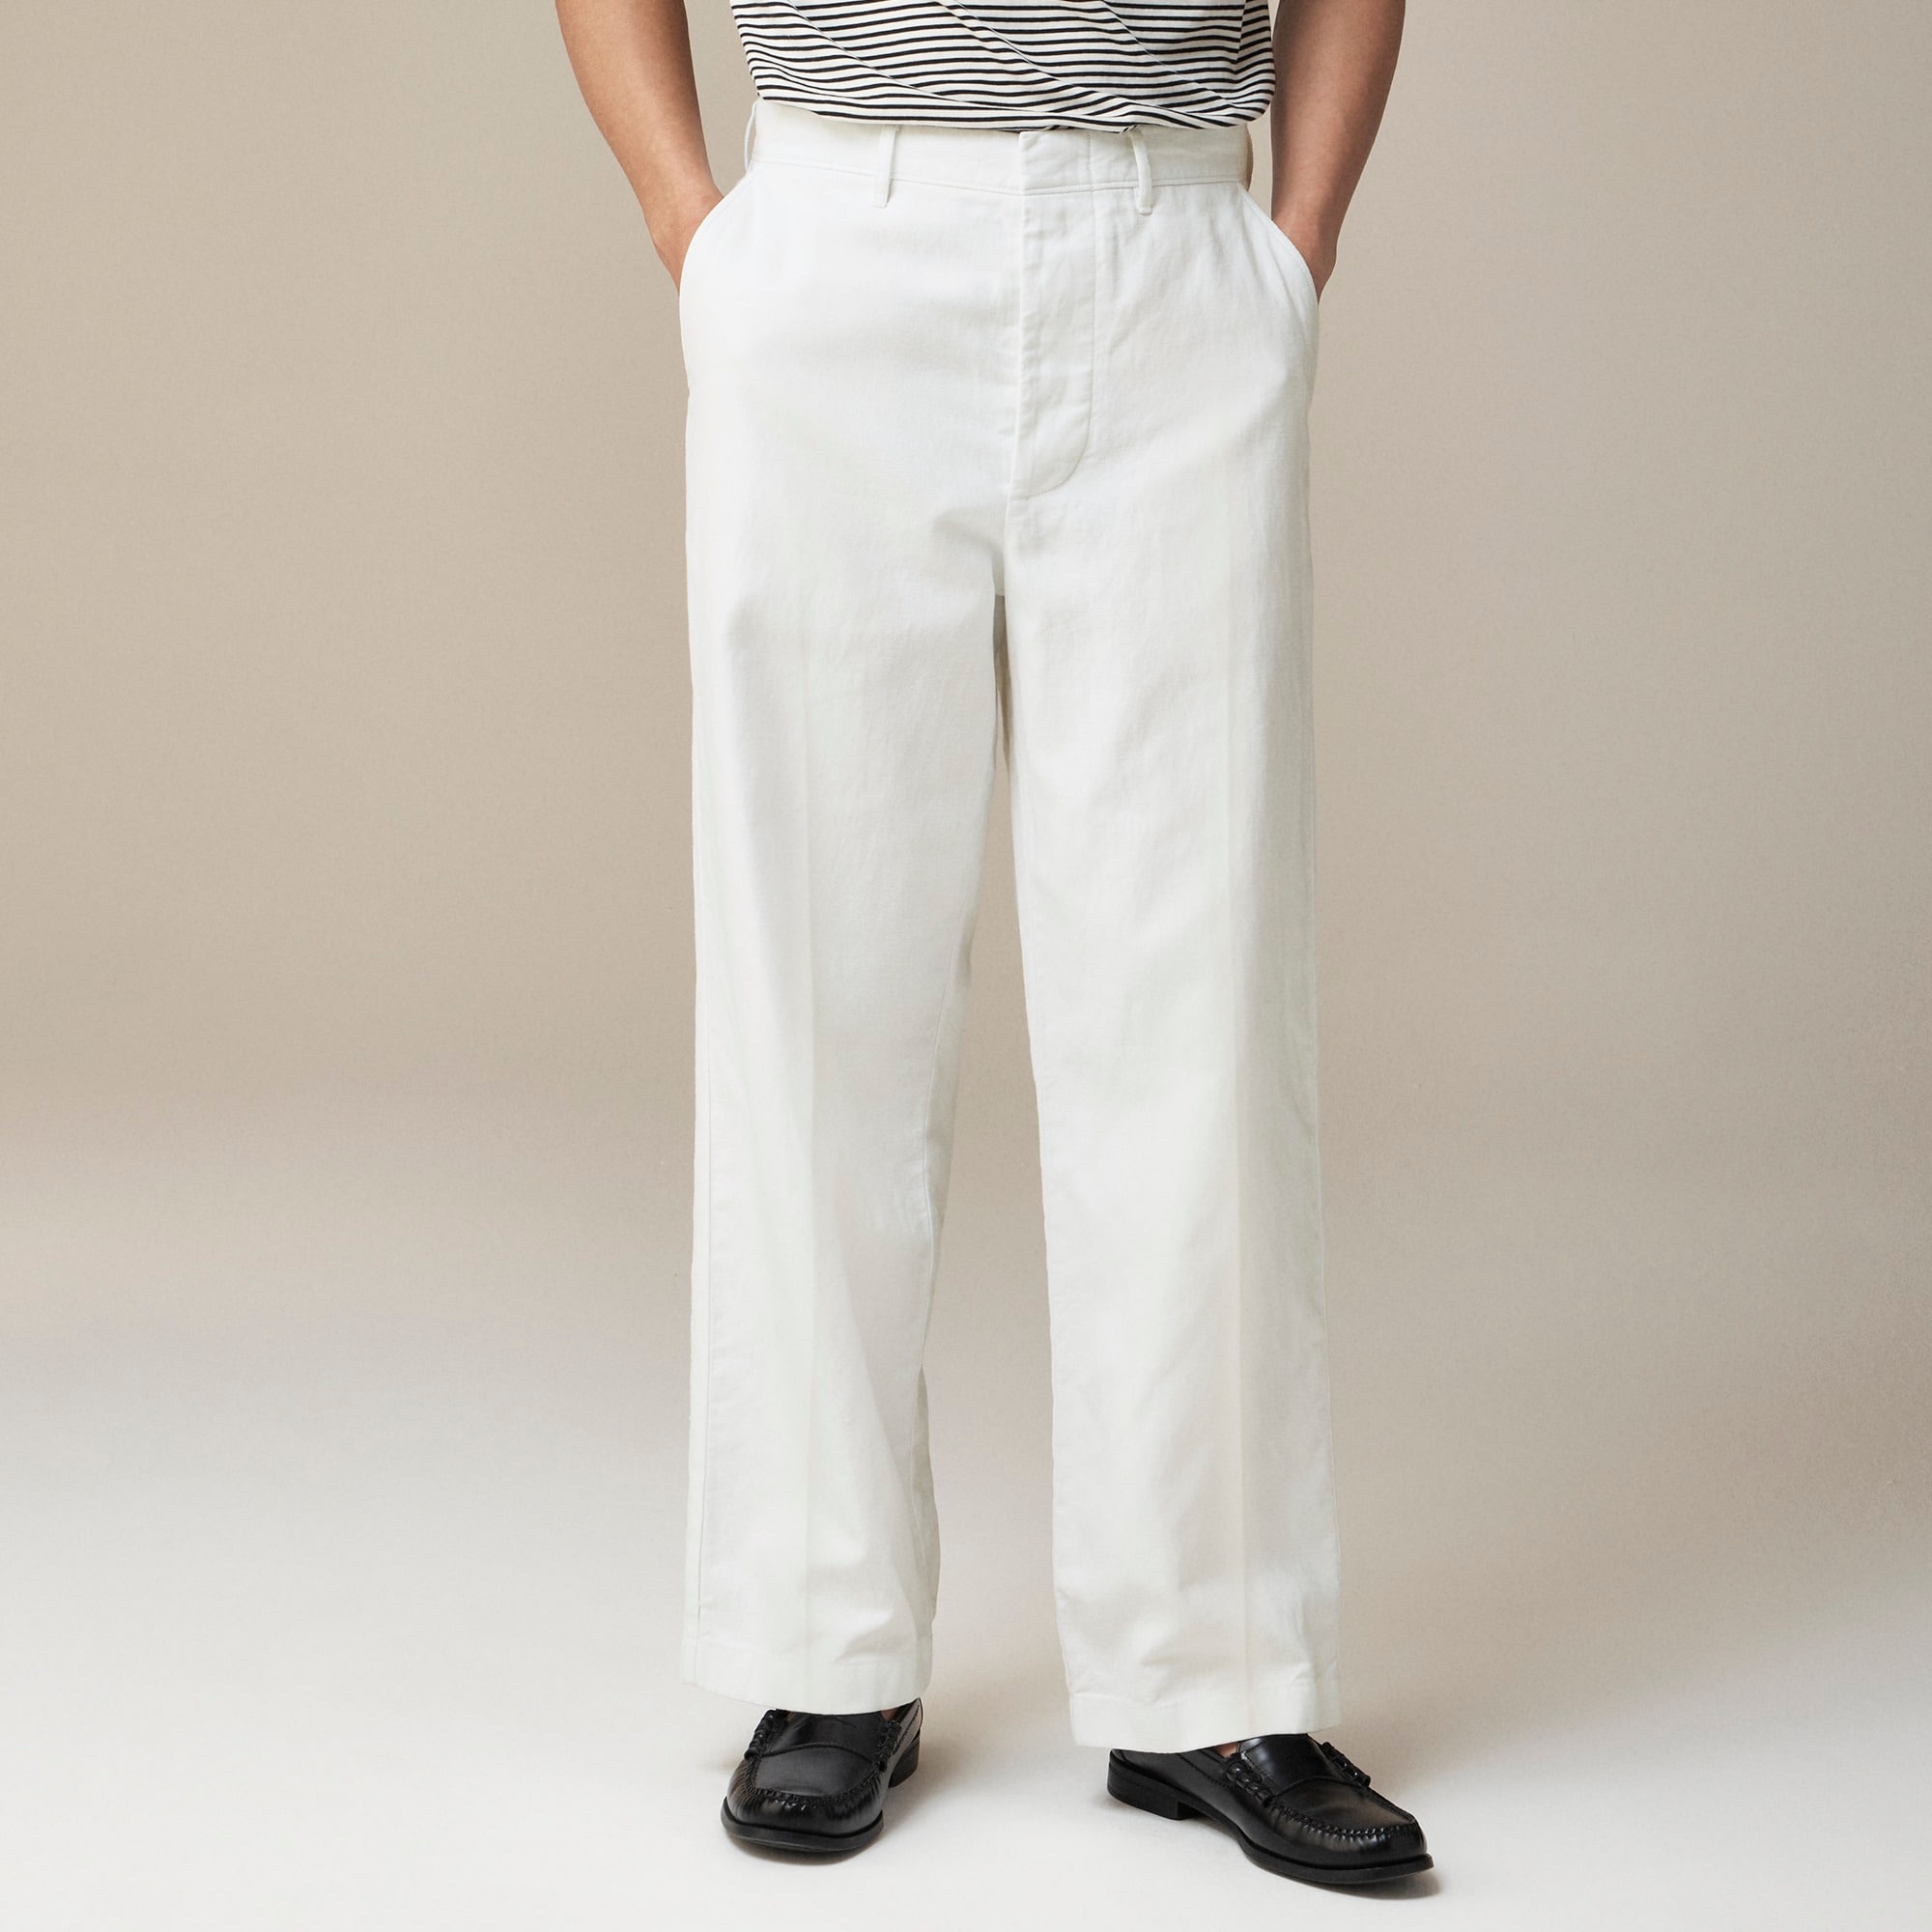  Creased summer trouser in cotton-linen blend